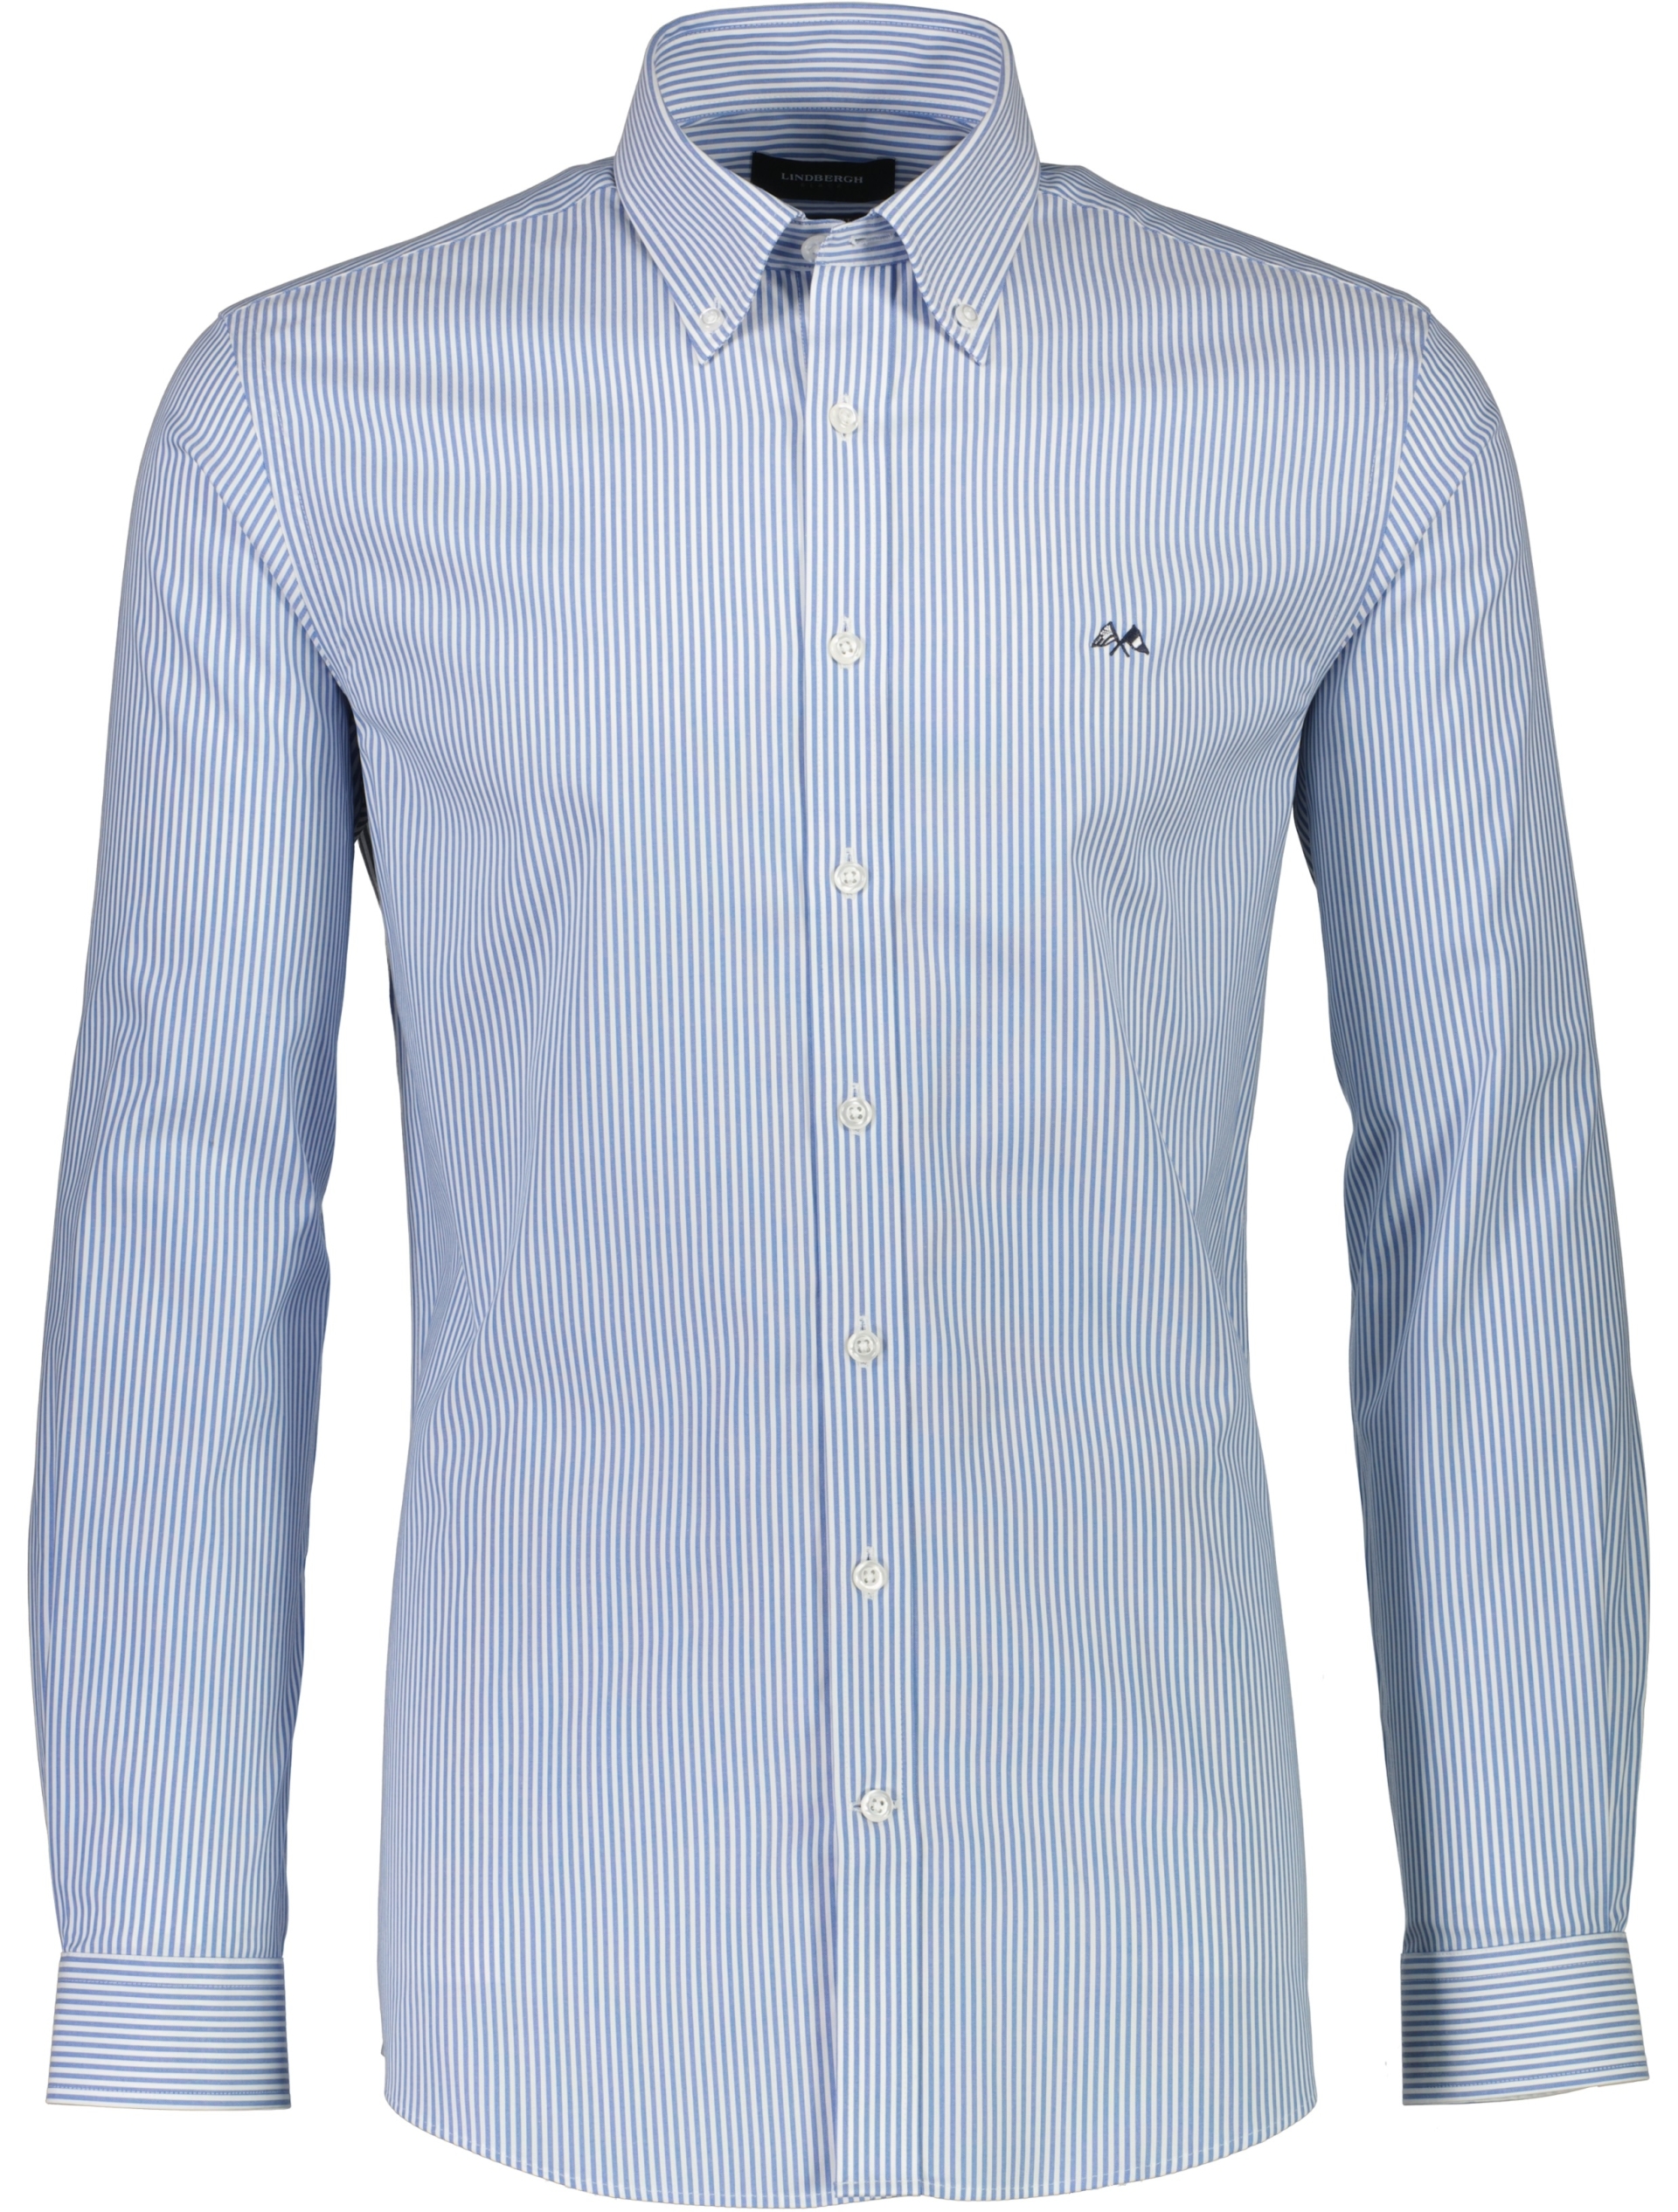 Lindbergh Business casual shirt blue / light blue stripe